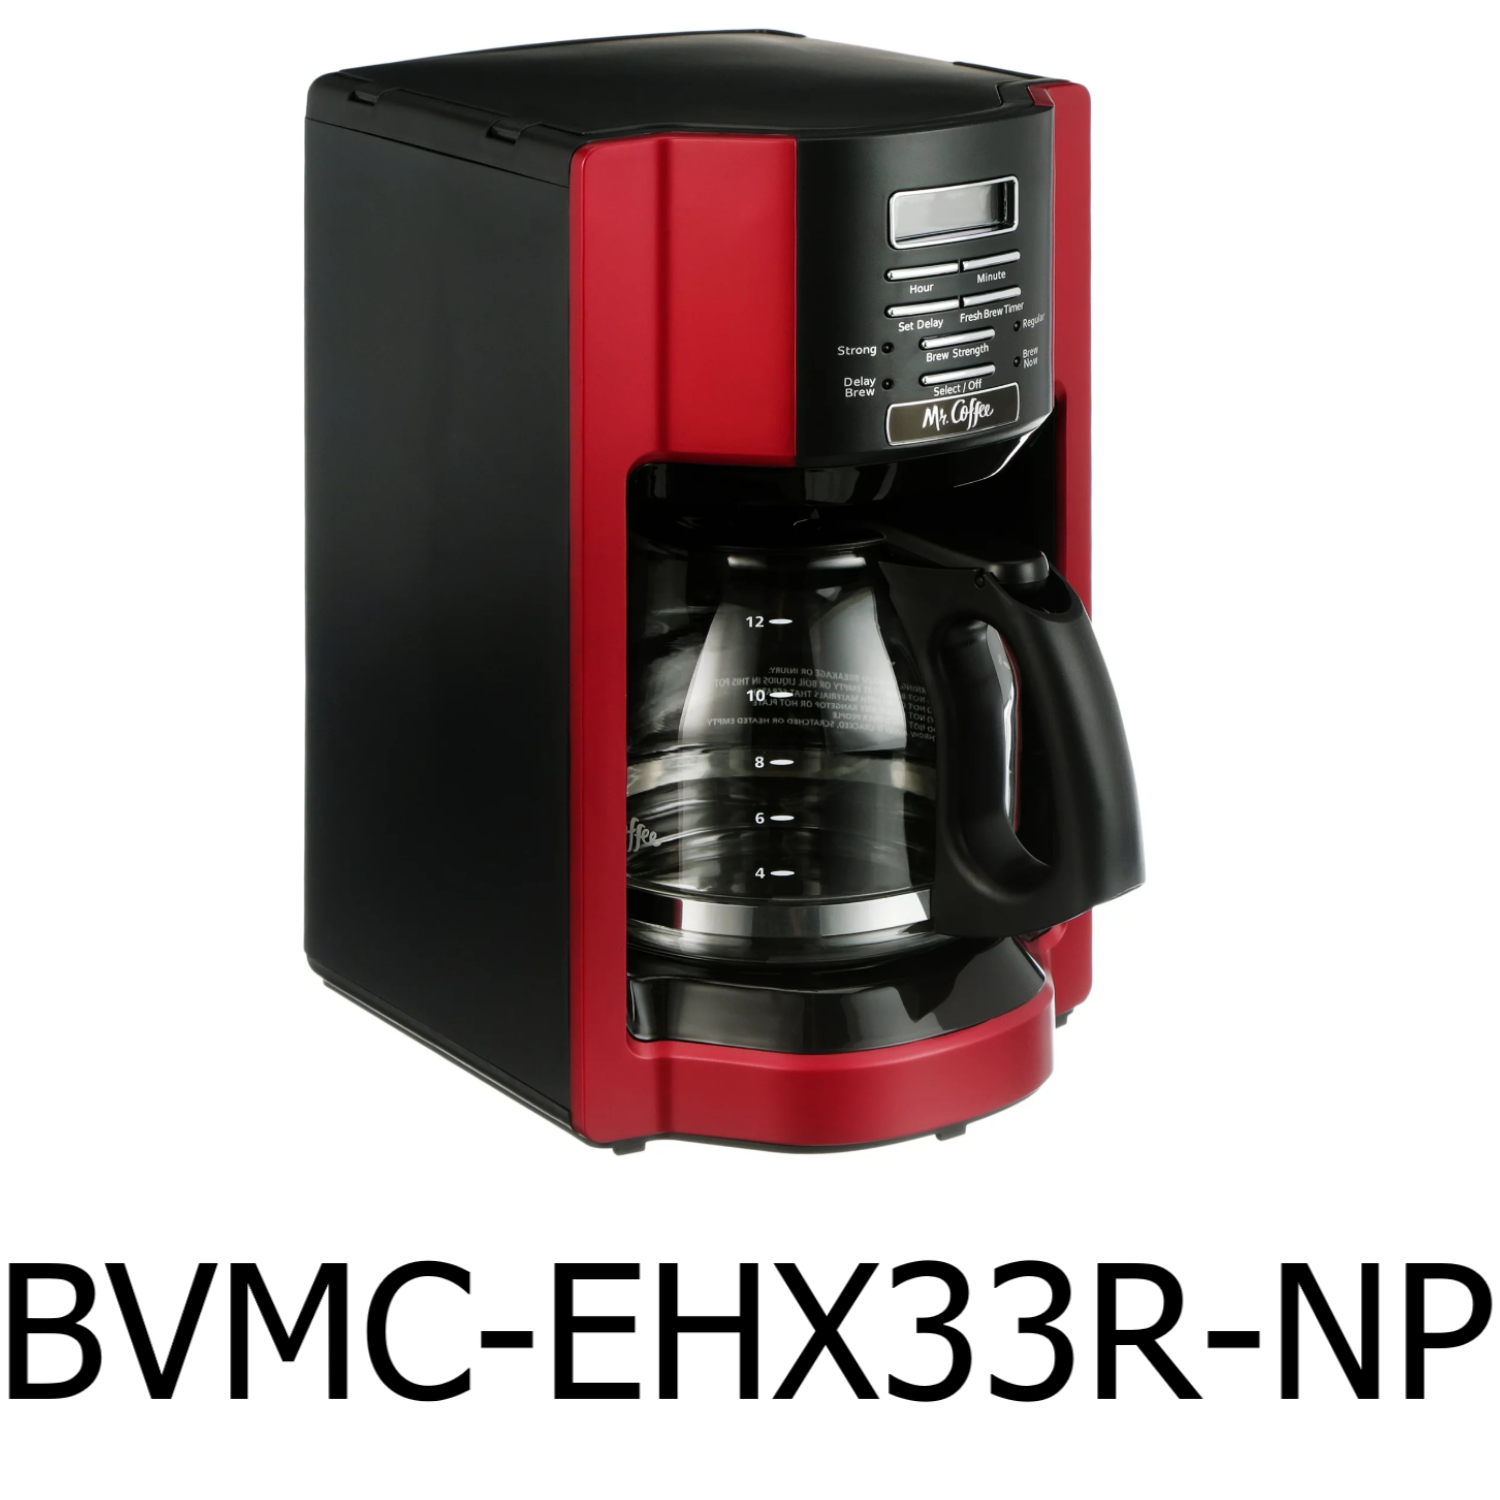 Mr Coffee Glass 12 Cup Programmable Coffee Maker w/ Basket & Coffee Filter